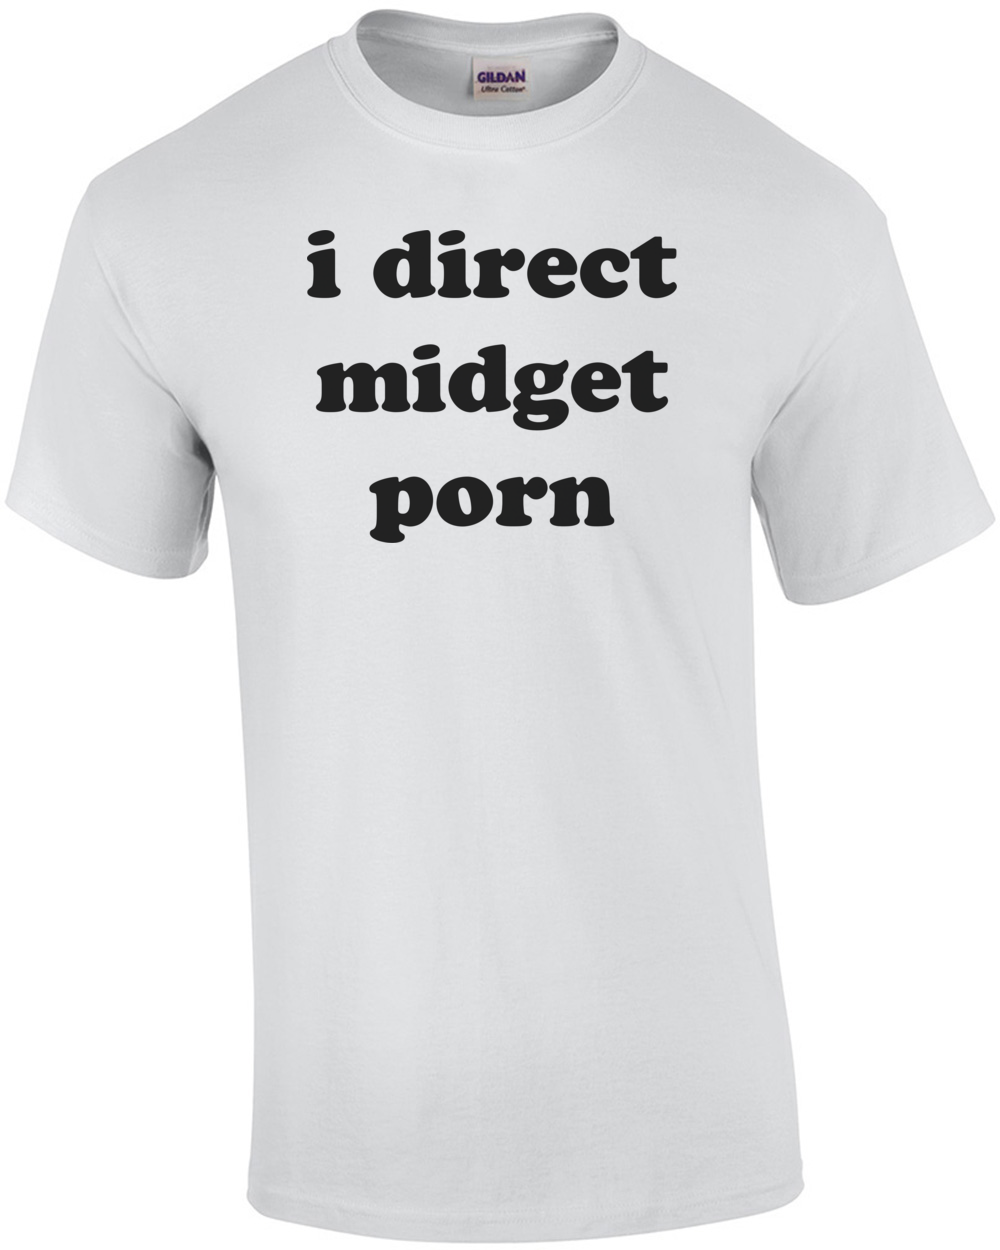 i direct midget porn Shirt eBay 